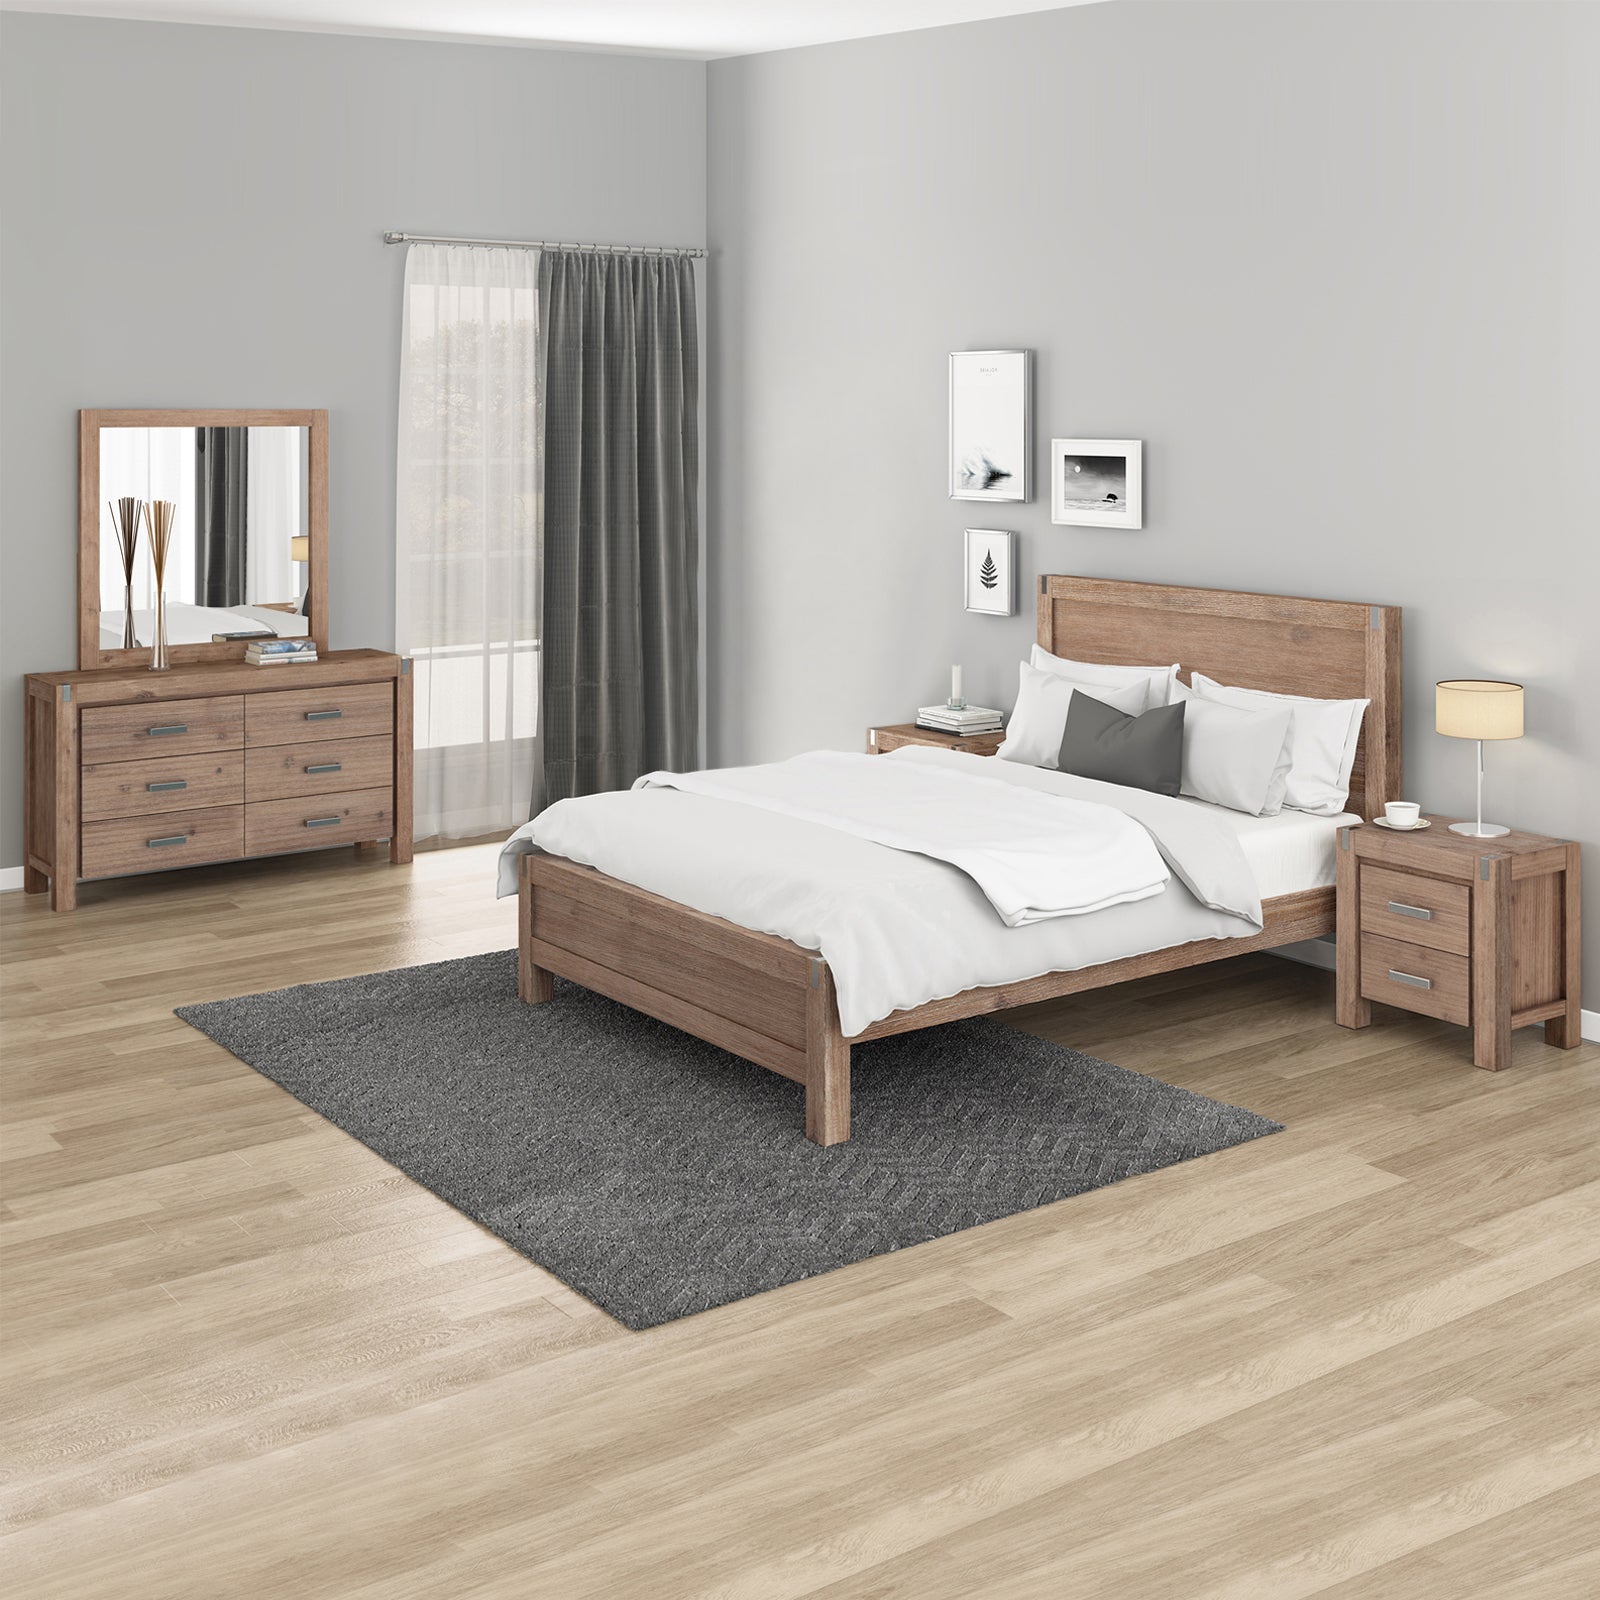 Noor 4 Pieces King Single Size Bedroom Suite Oak Colour with Dresser